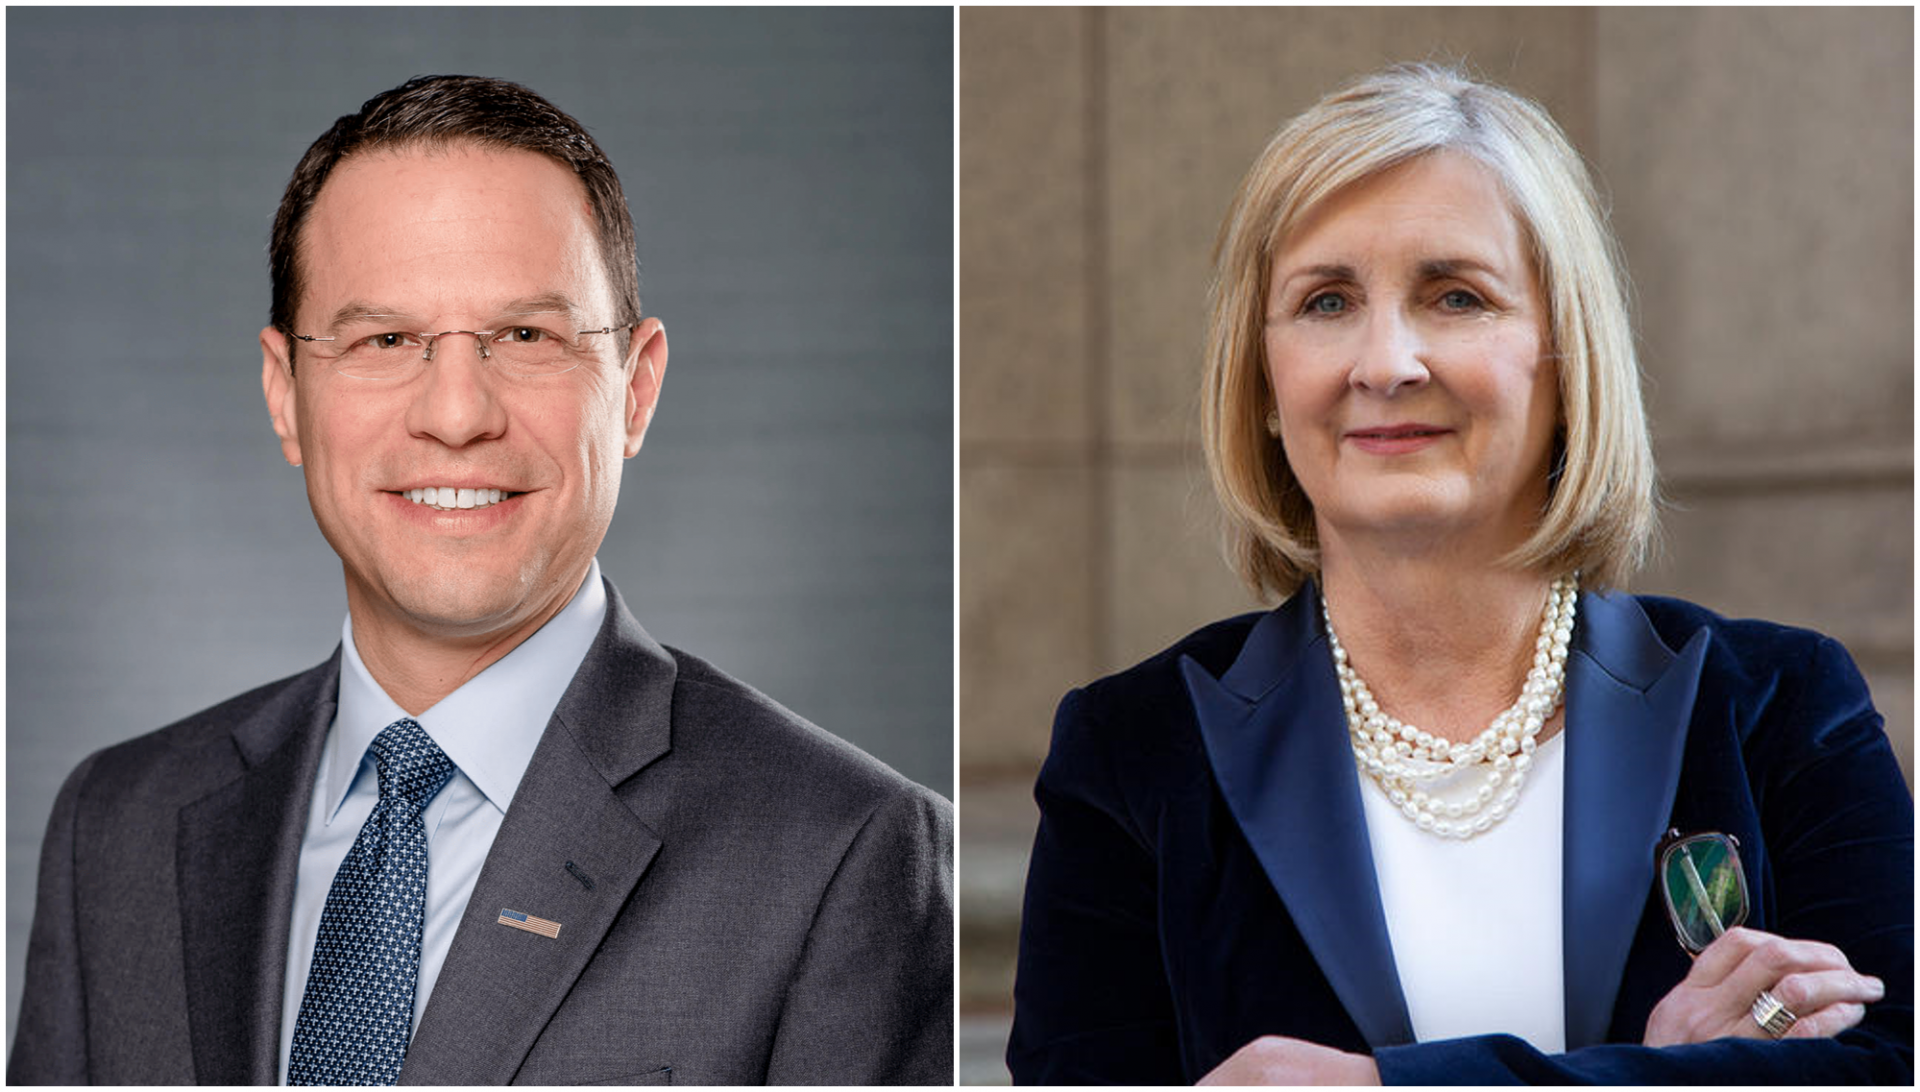 Democrat Josh Shapiro (left) seeks to defeat Republican Heather Heidelbaugh in his bid for a second term as Pennsylvania Attorney General.